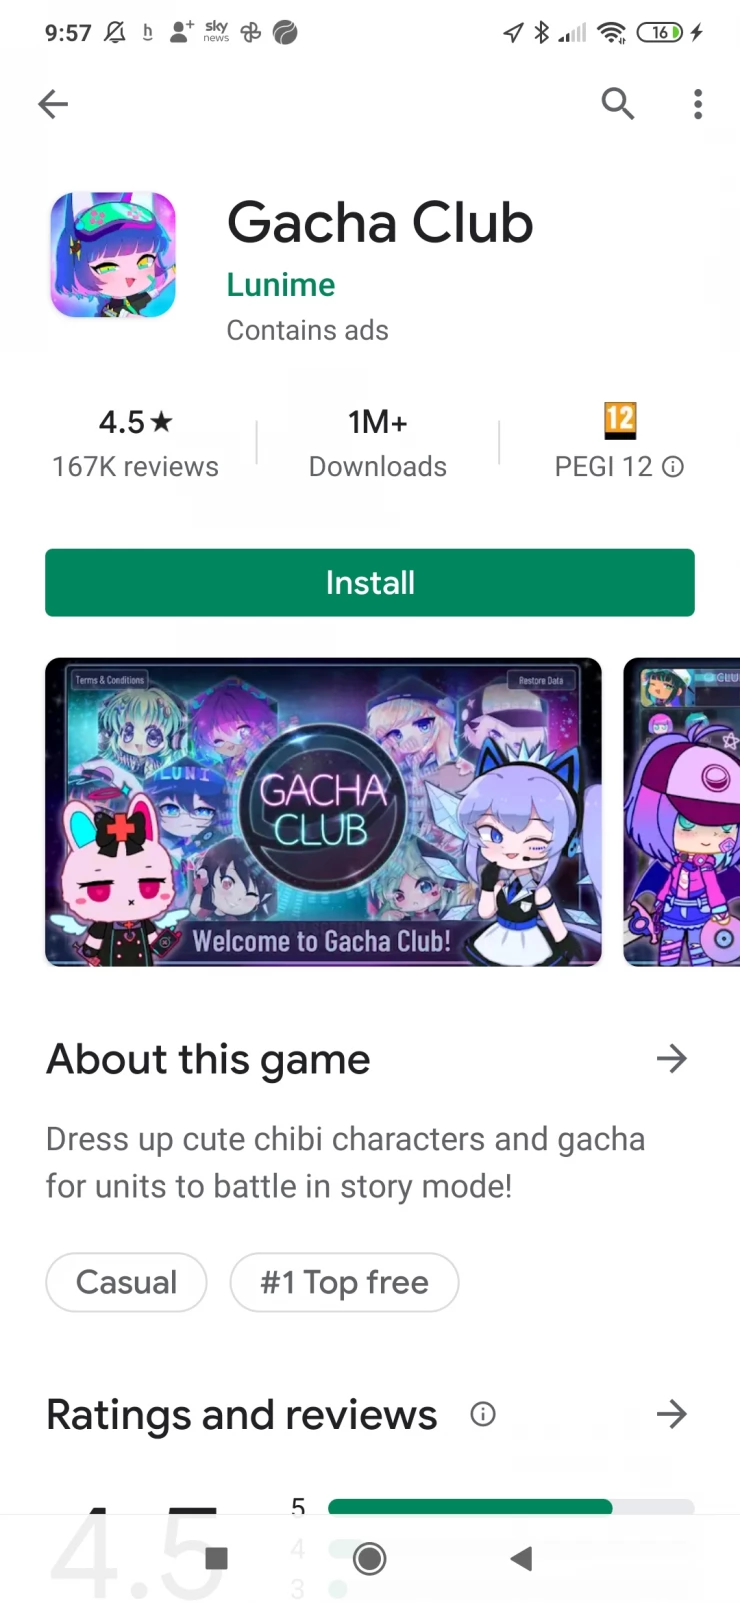 Download Gacha Club on Google Play